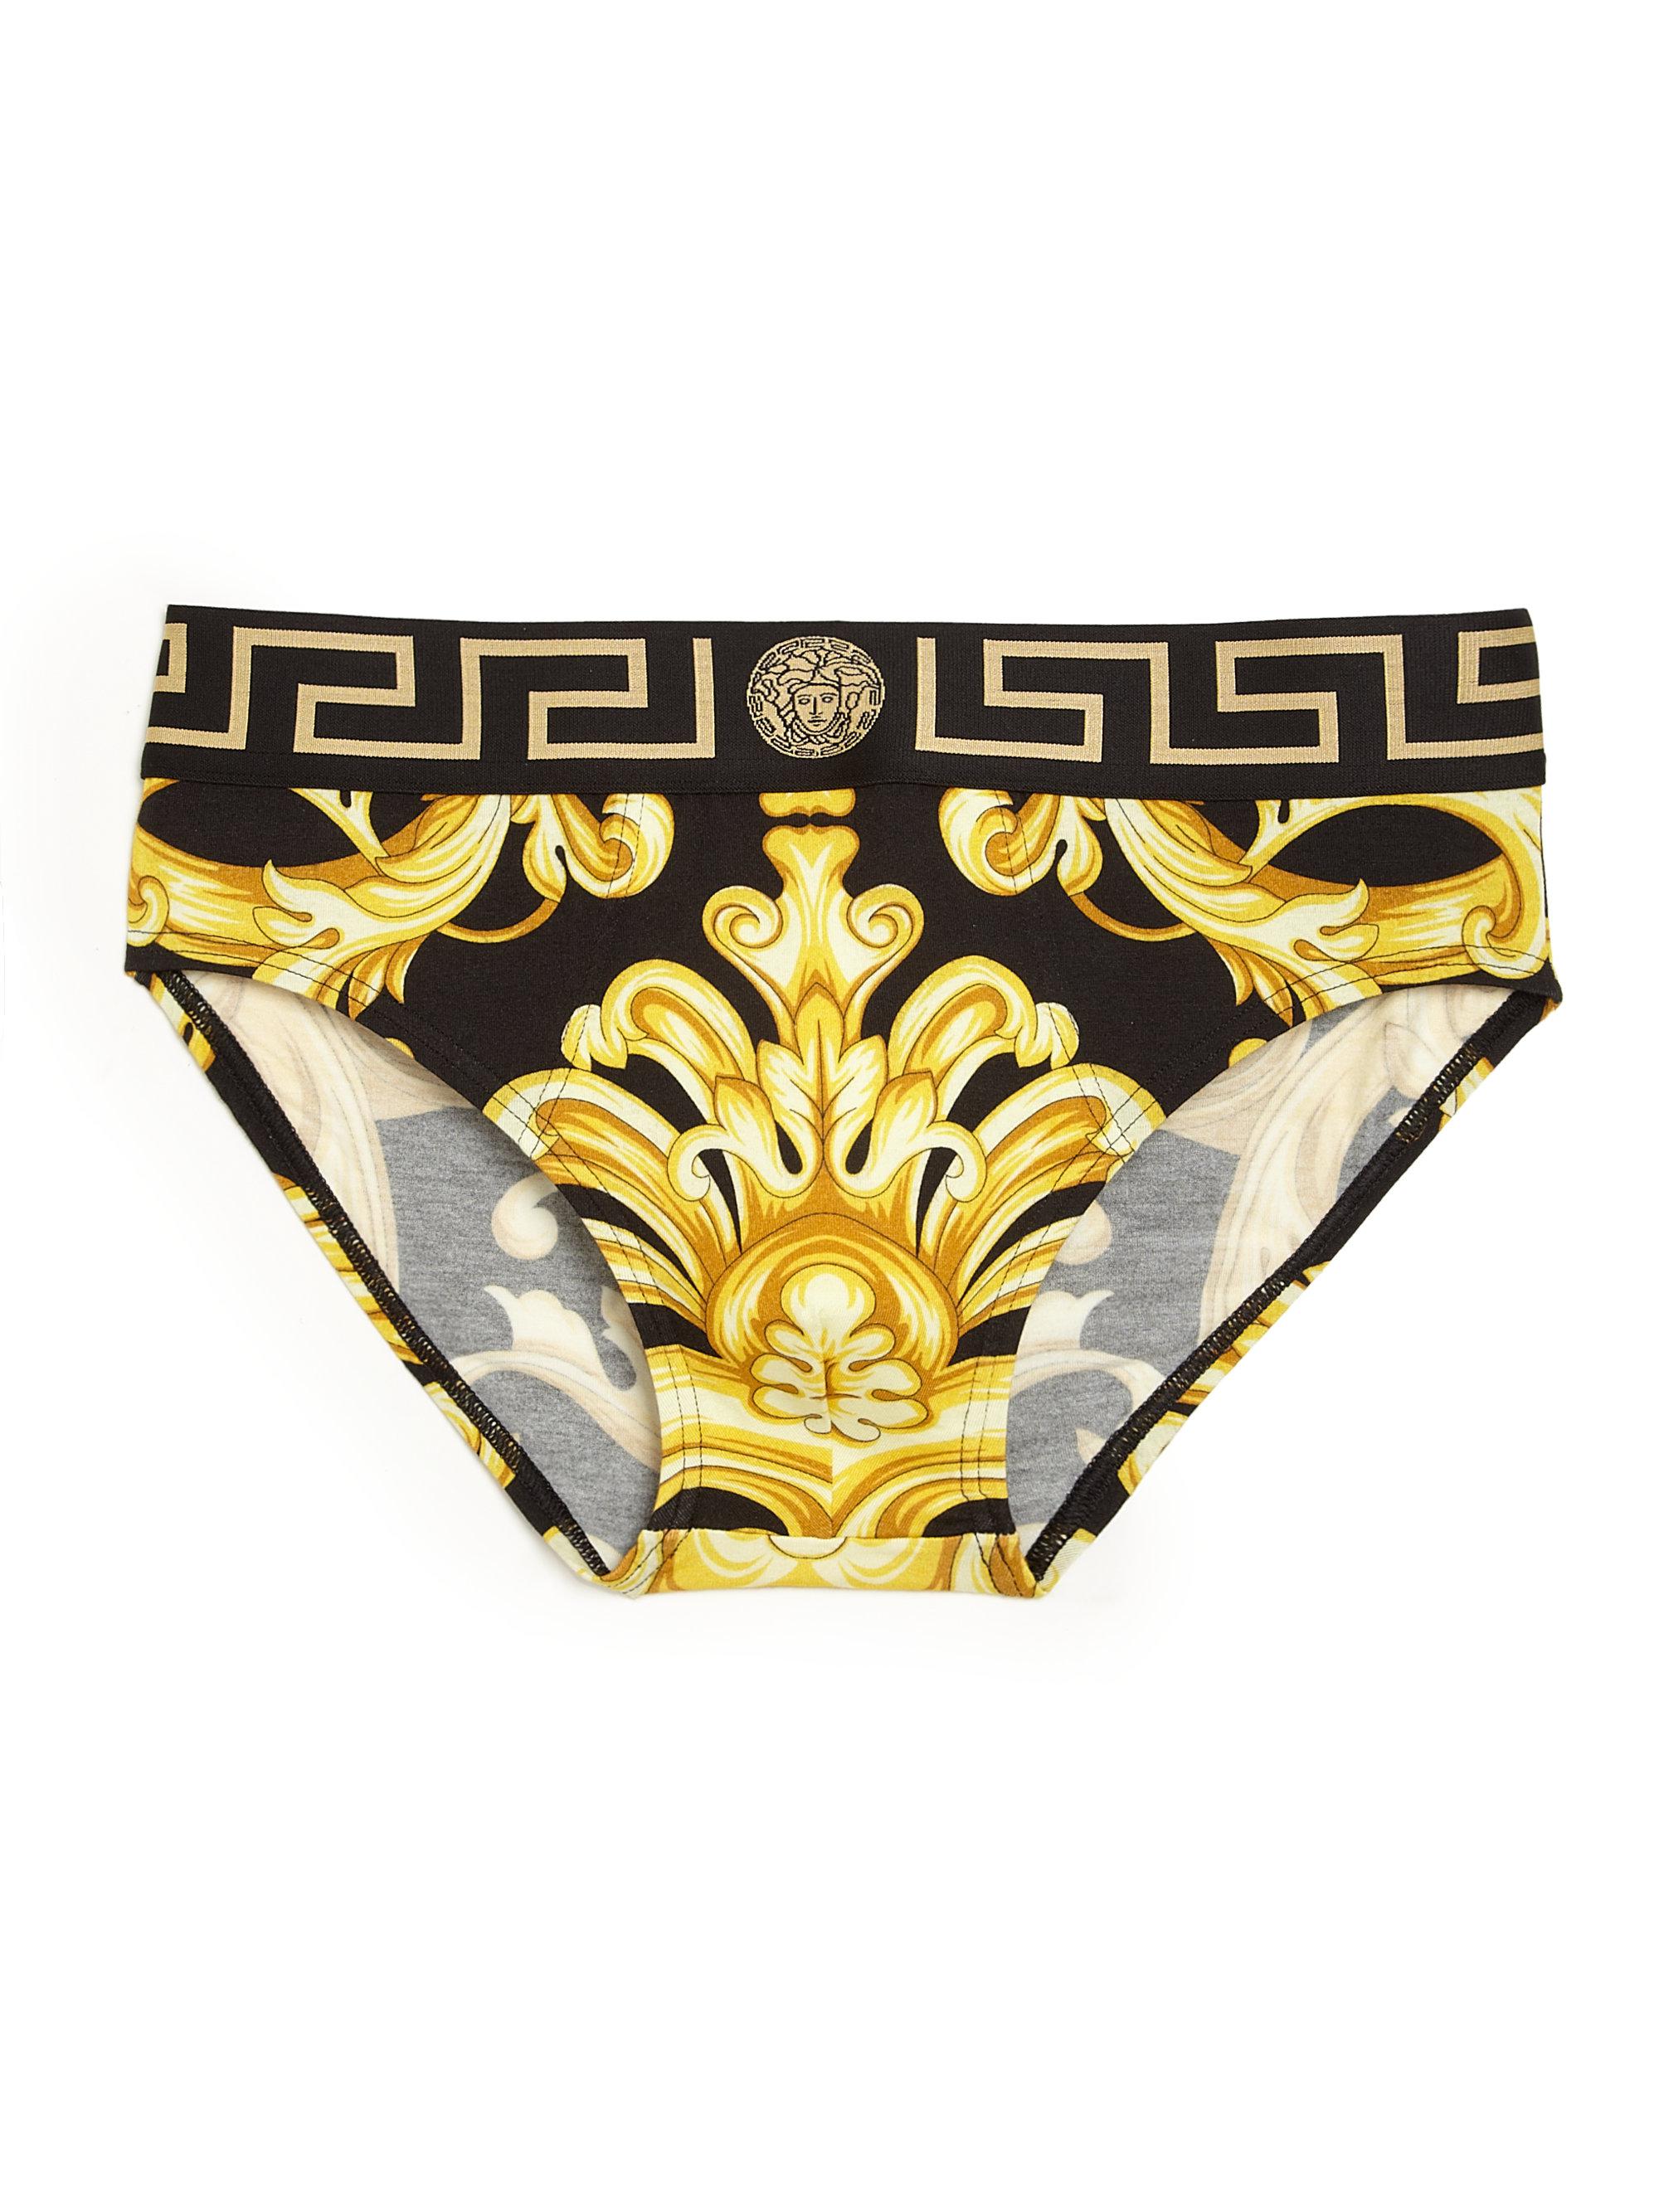 versace baroque underwear, OFF 73%,Best 